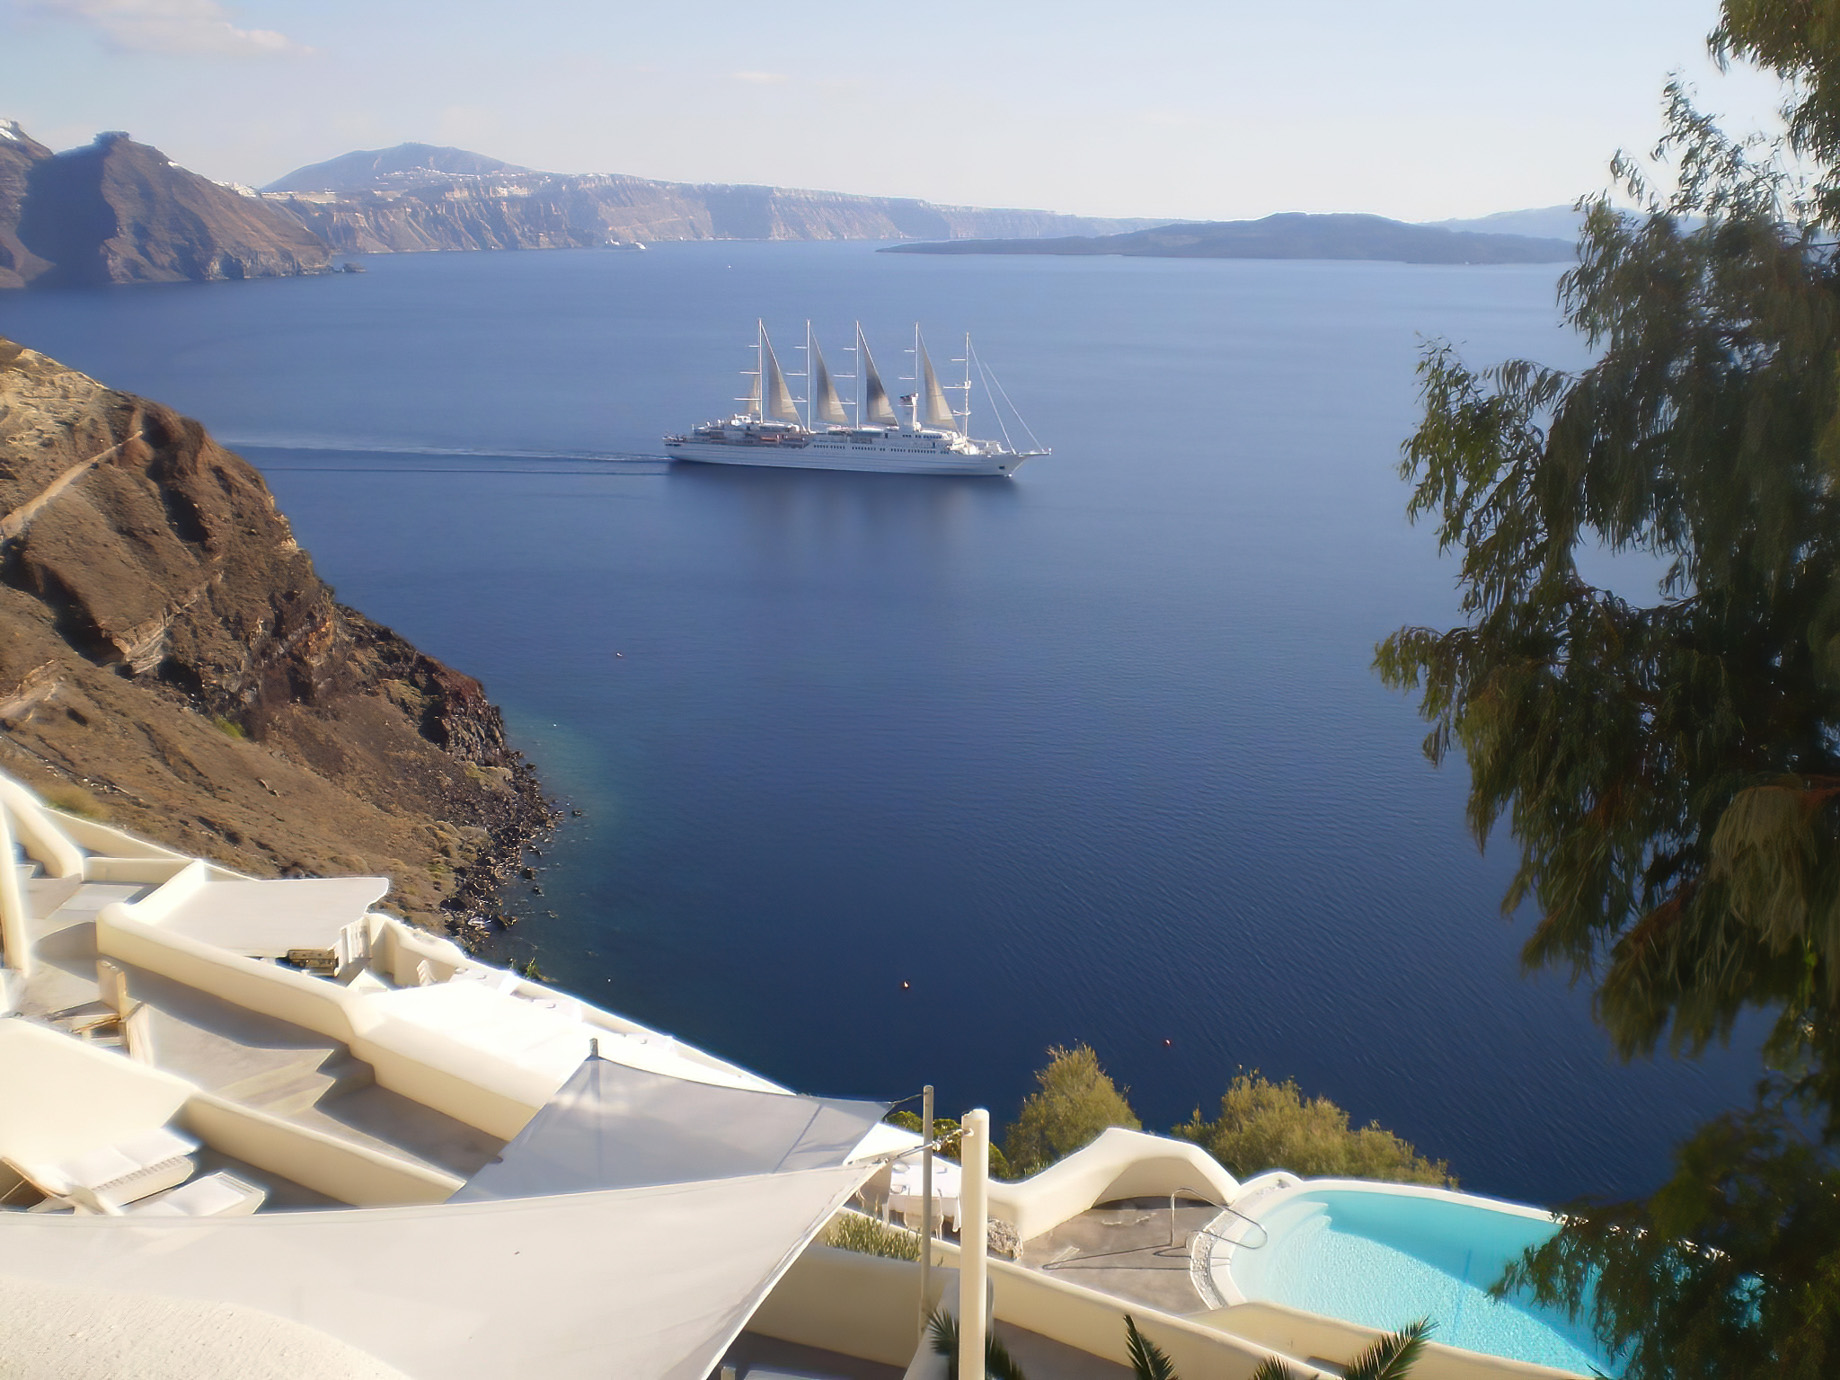 Mystique Hotel Santorini – Oia, Santorini Island, Greece – Clifftop Ocean View